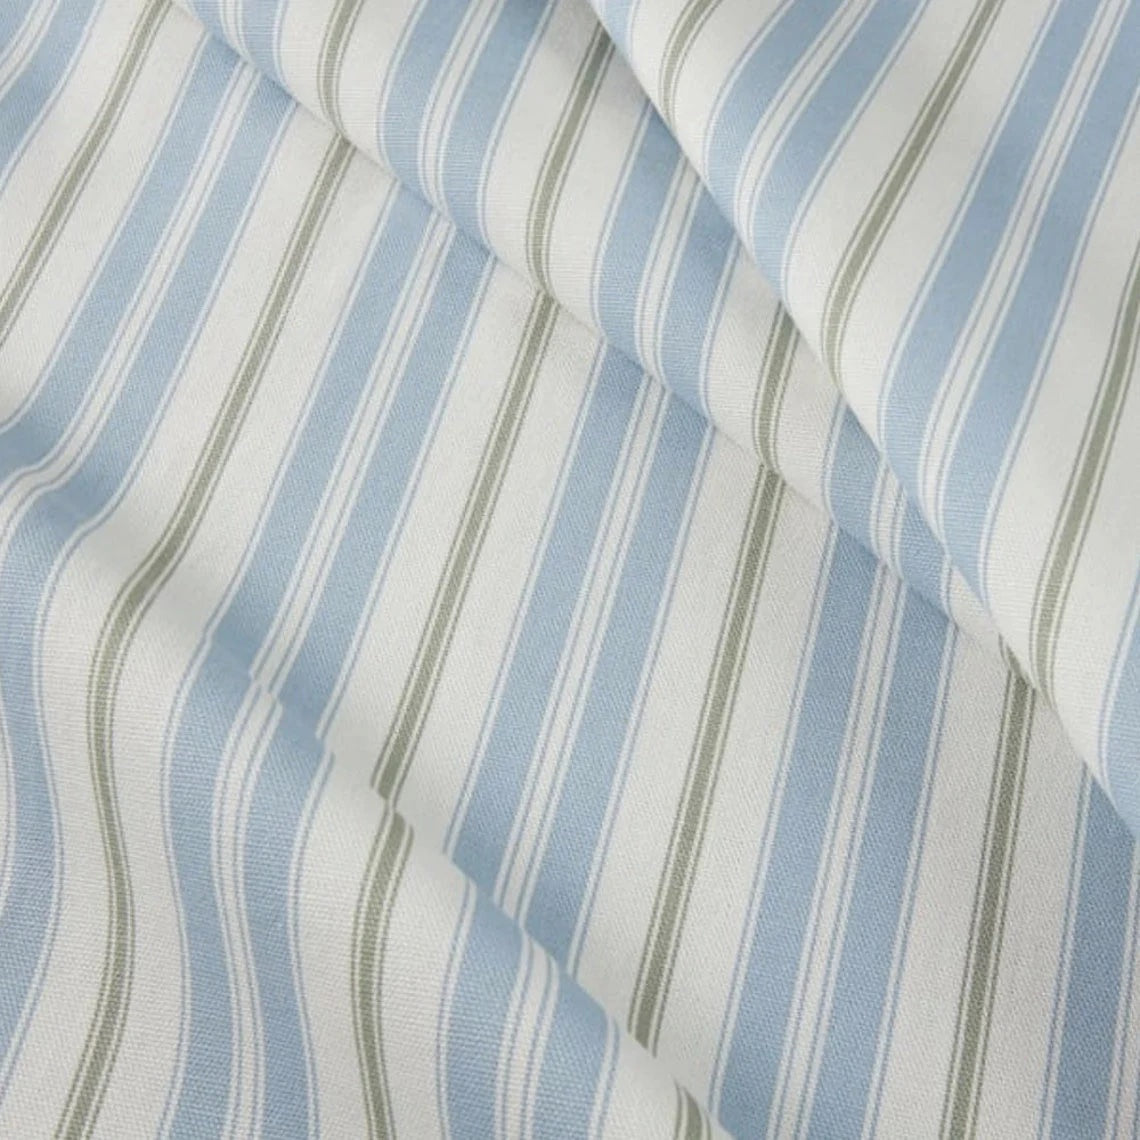 bed scarf in newbury antique blue stripe- blue, green, white